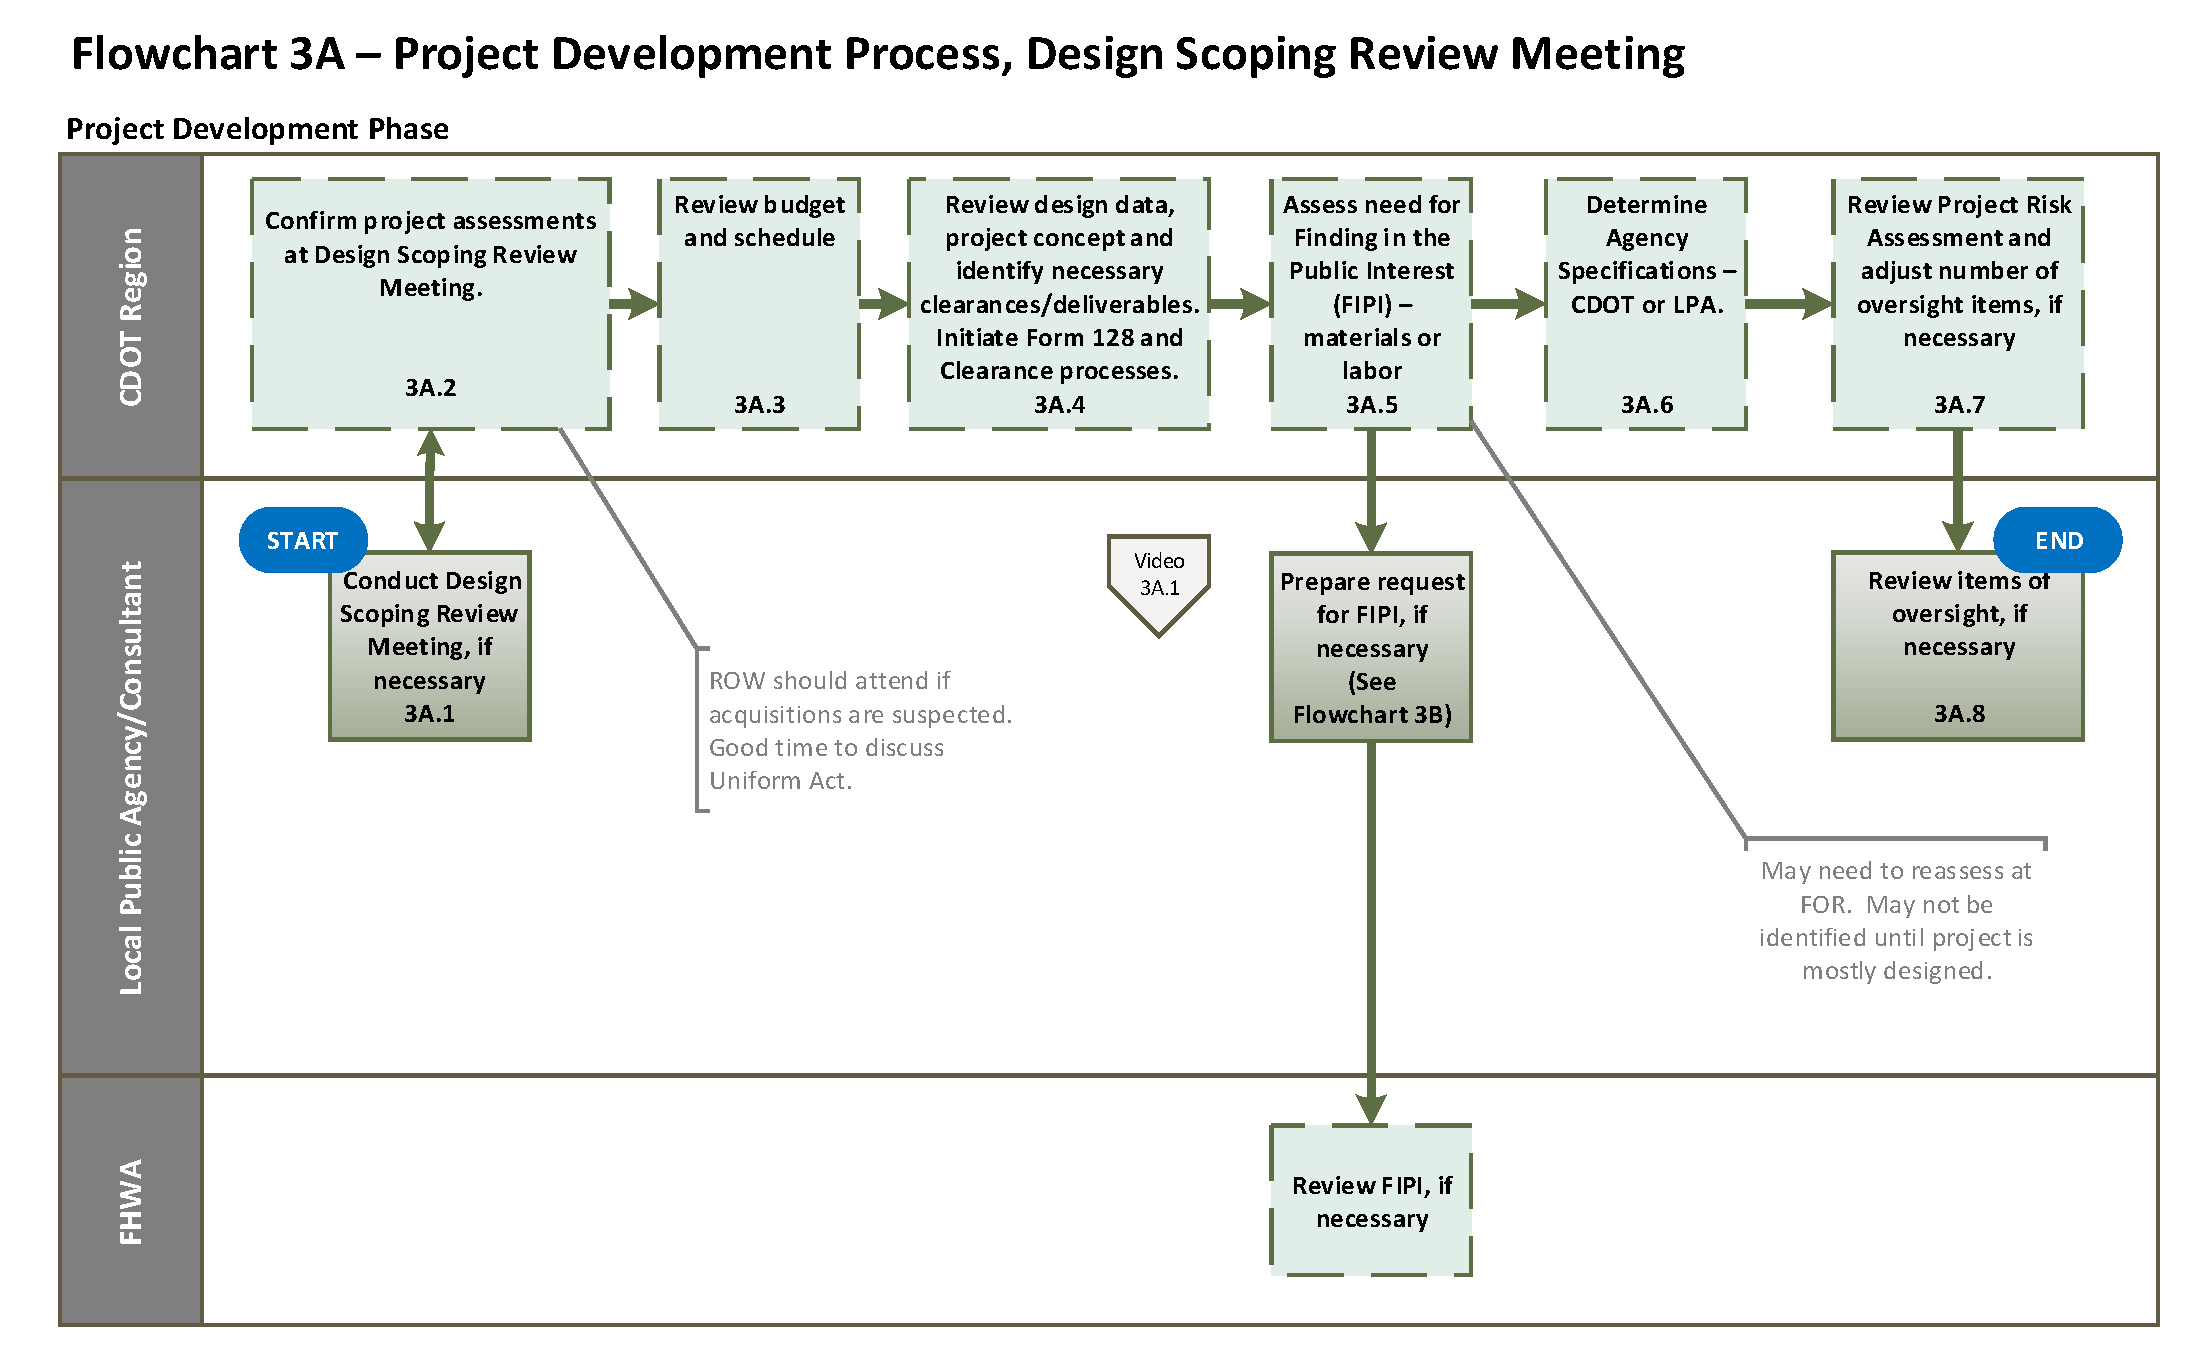 Project Development Flow Chart